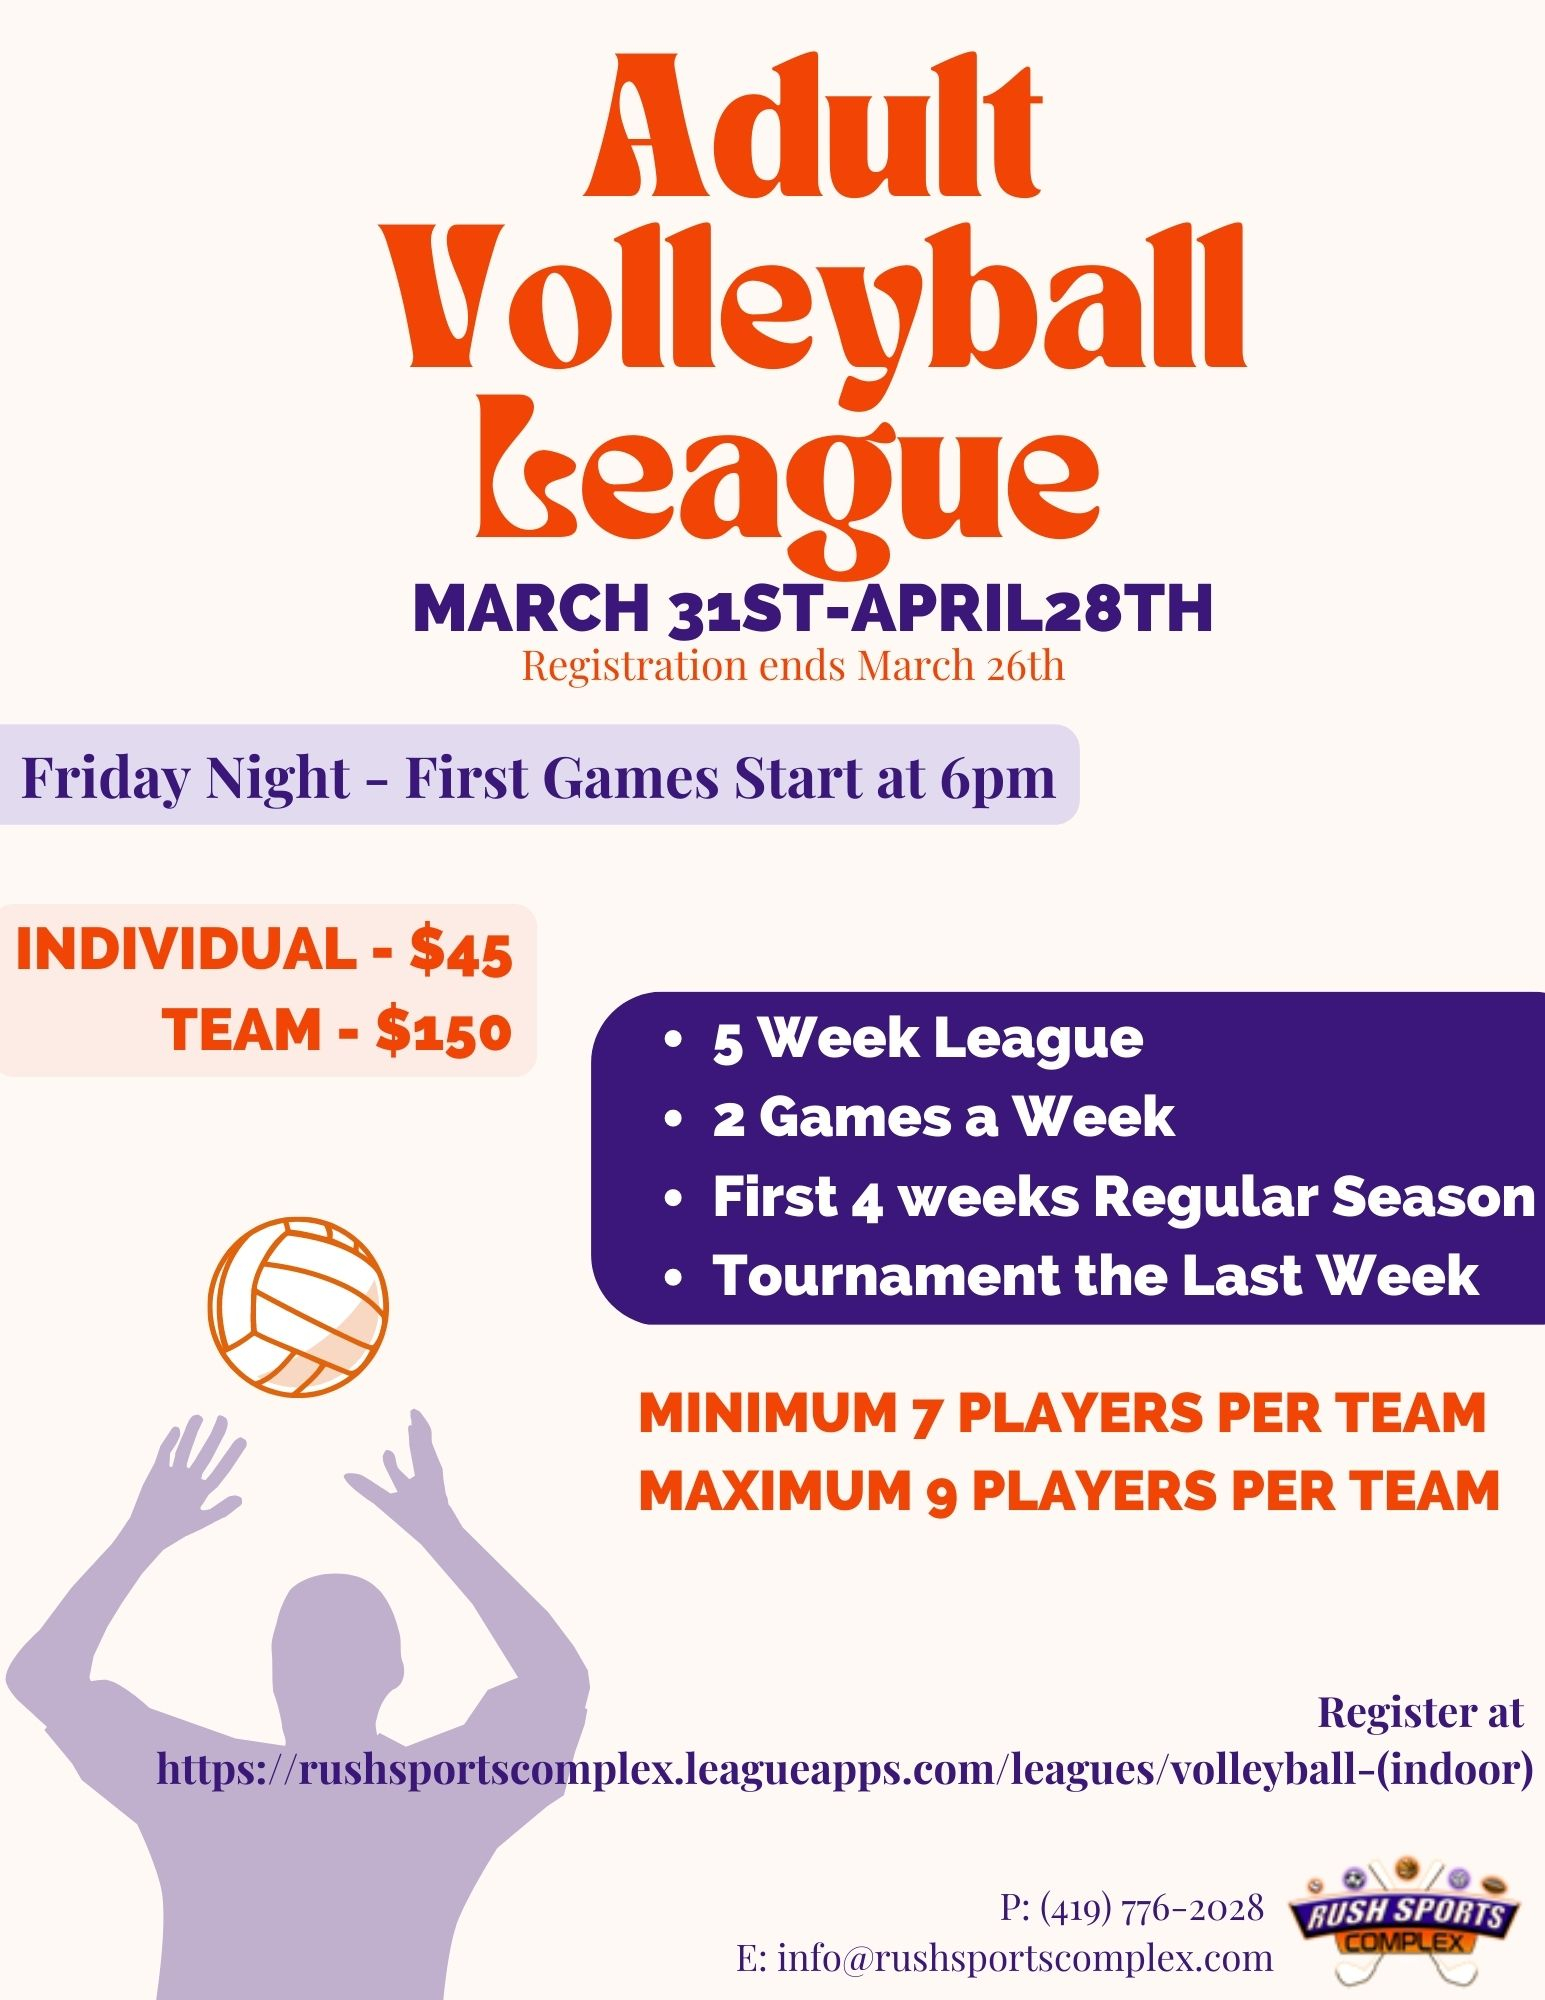 Adult Volleyball League Flyer.jpg